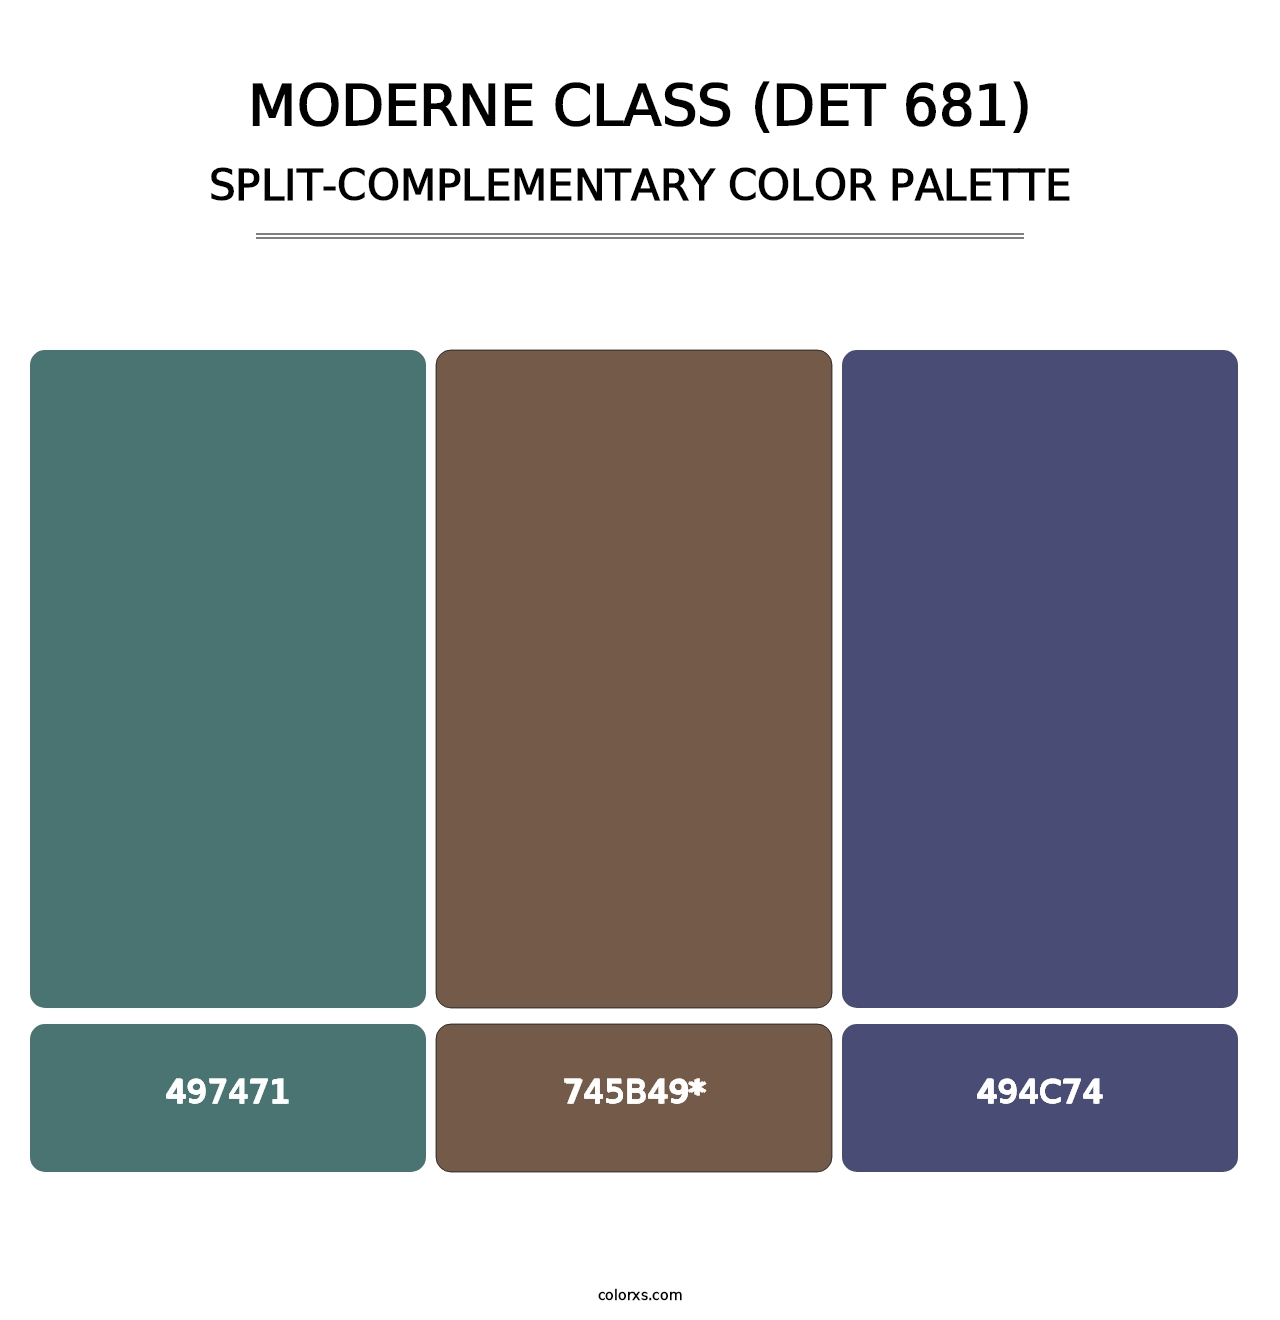 Moderne Class (DET 681) - Split-Complementary Color Palette